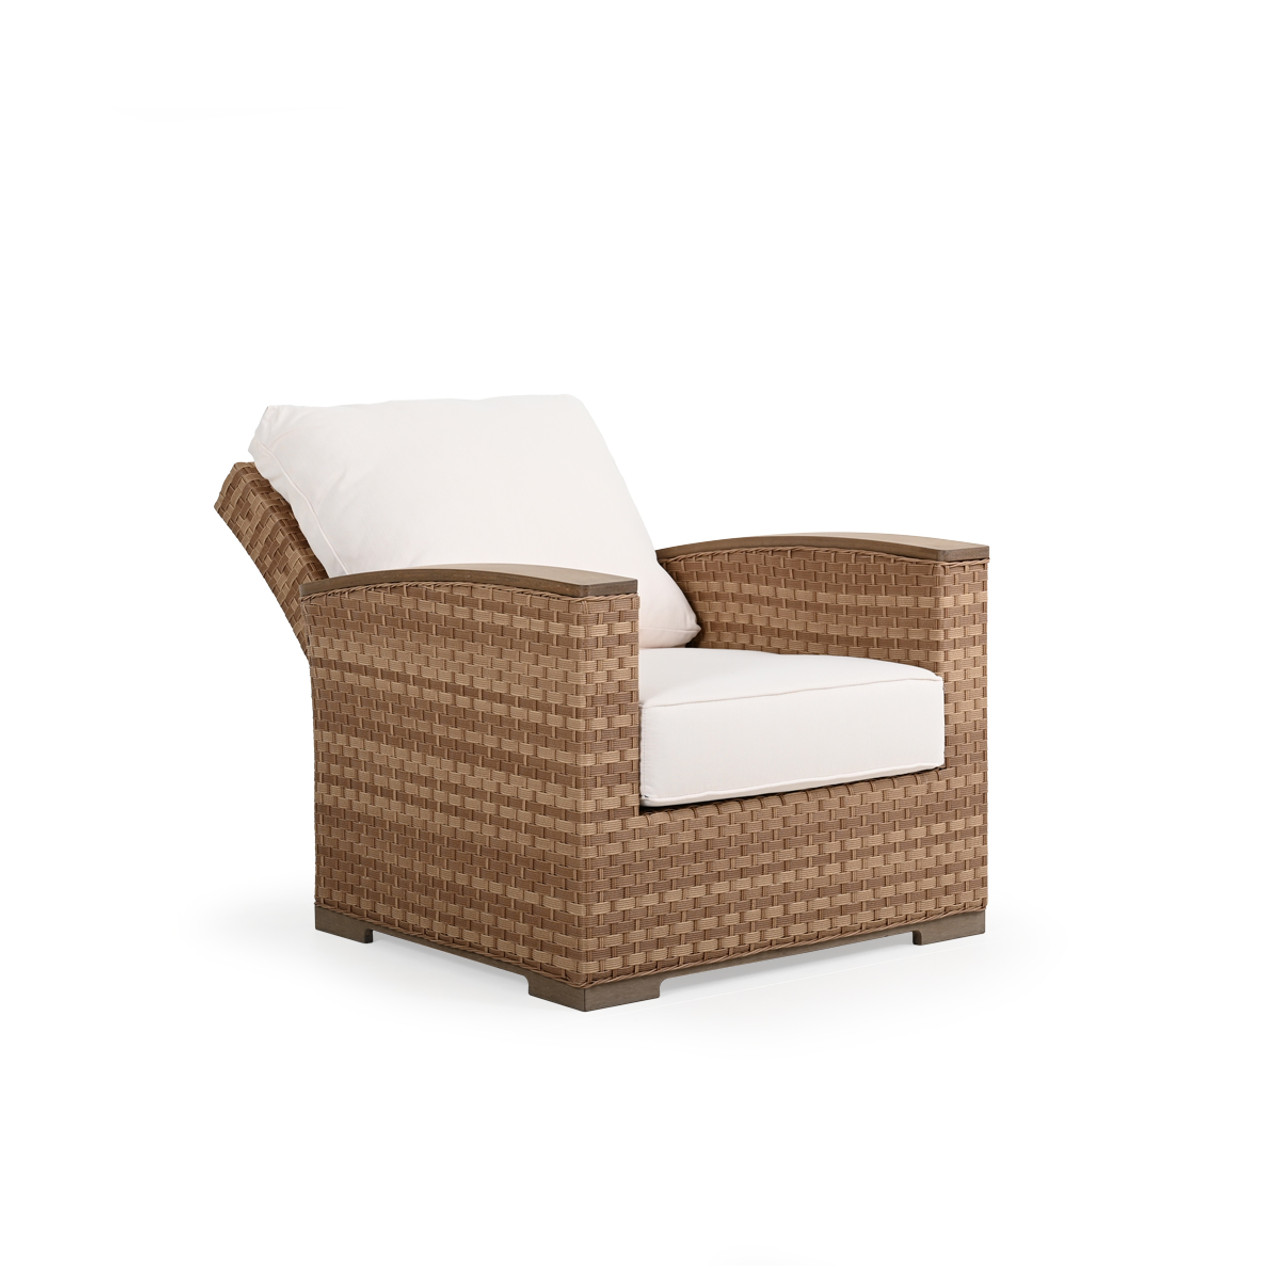 Outdoor Bliss: Unwind in Comfort with an Outdoor Patio Wicker Recliner Chair